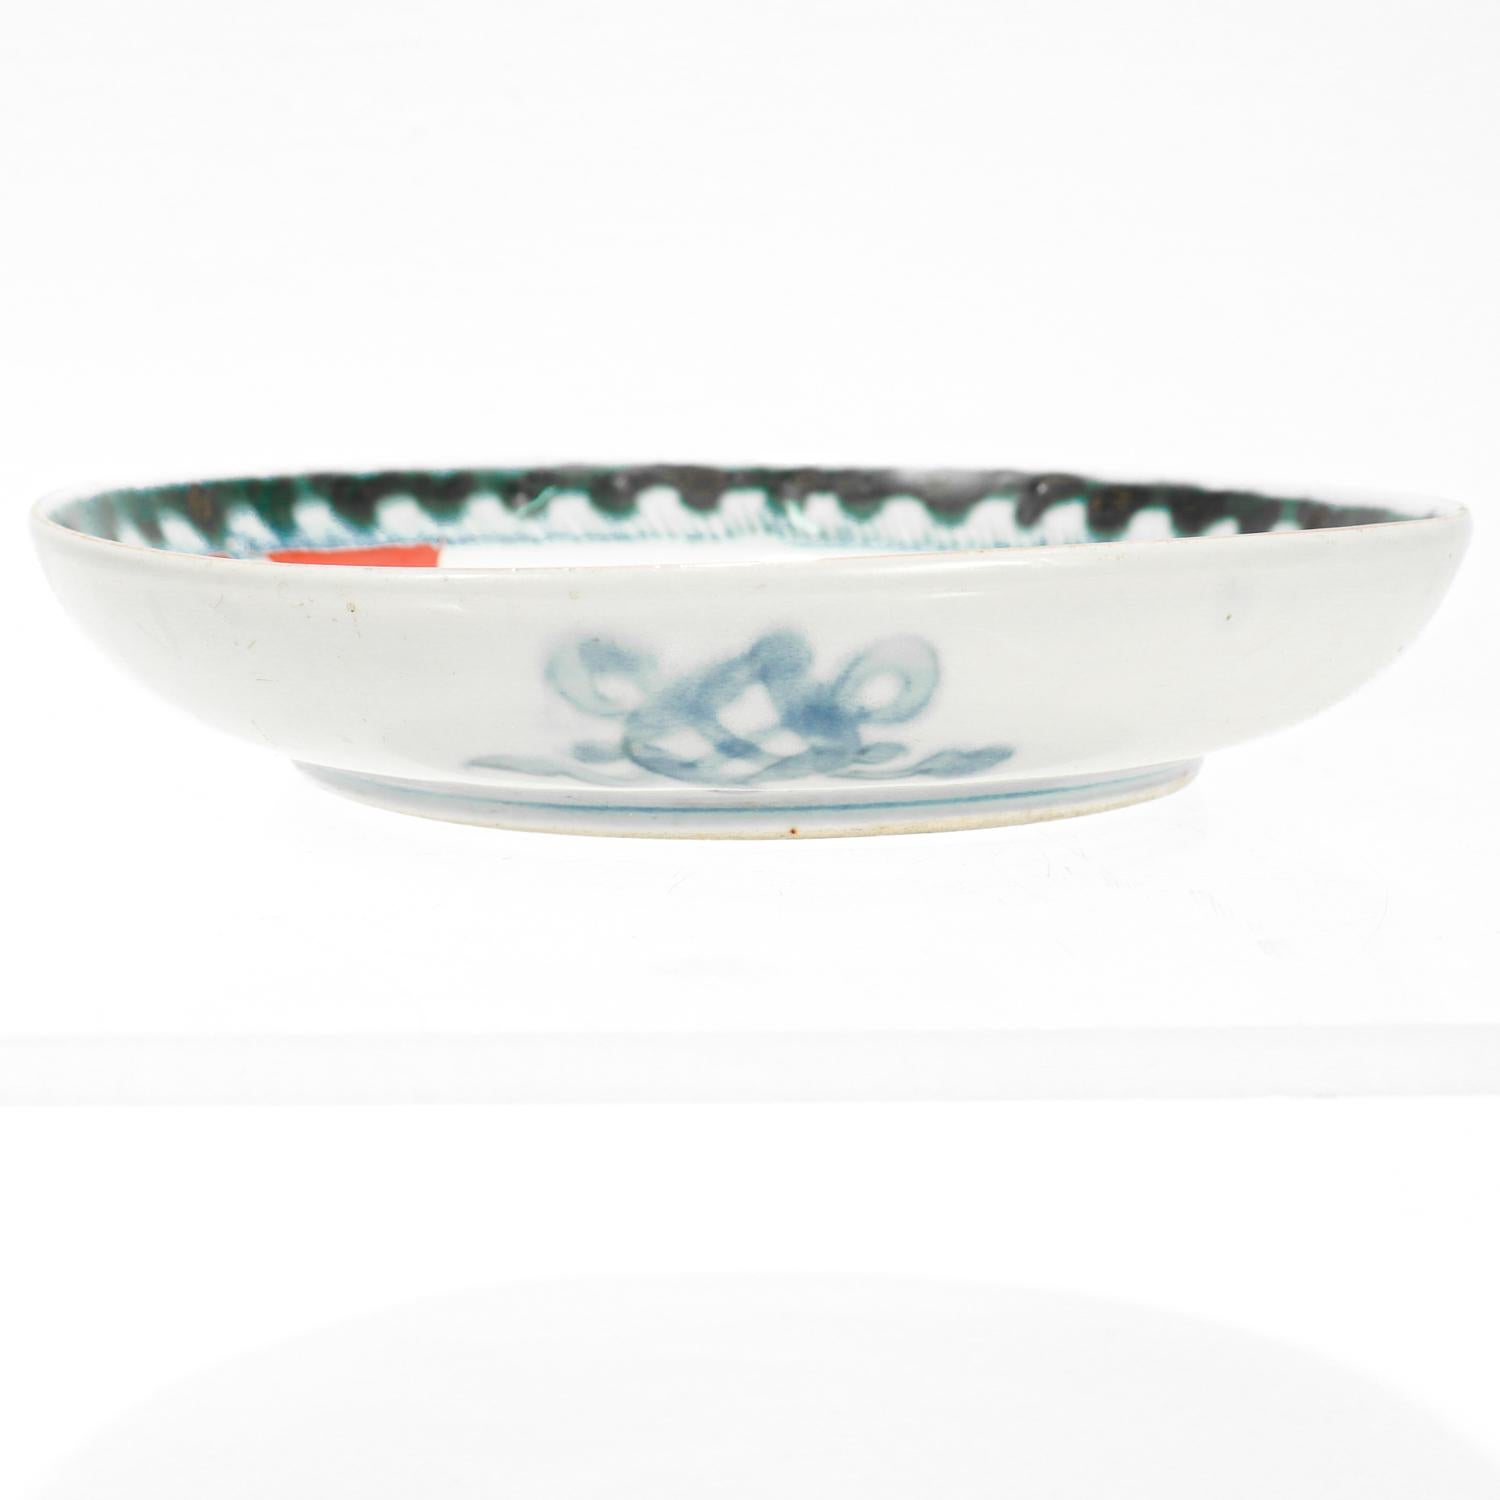 Antique Japanese Imari Porcelain Plate or Dish For Sale 2